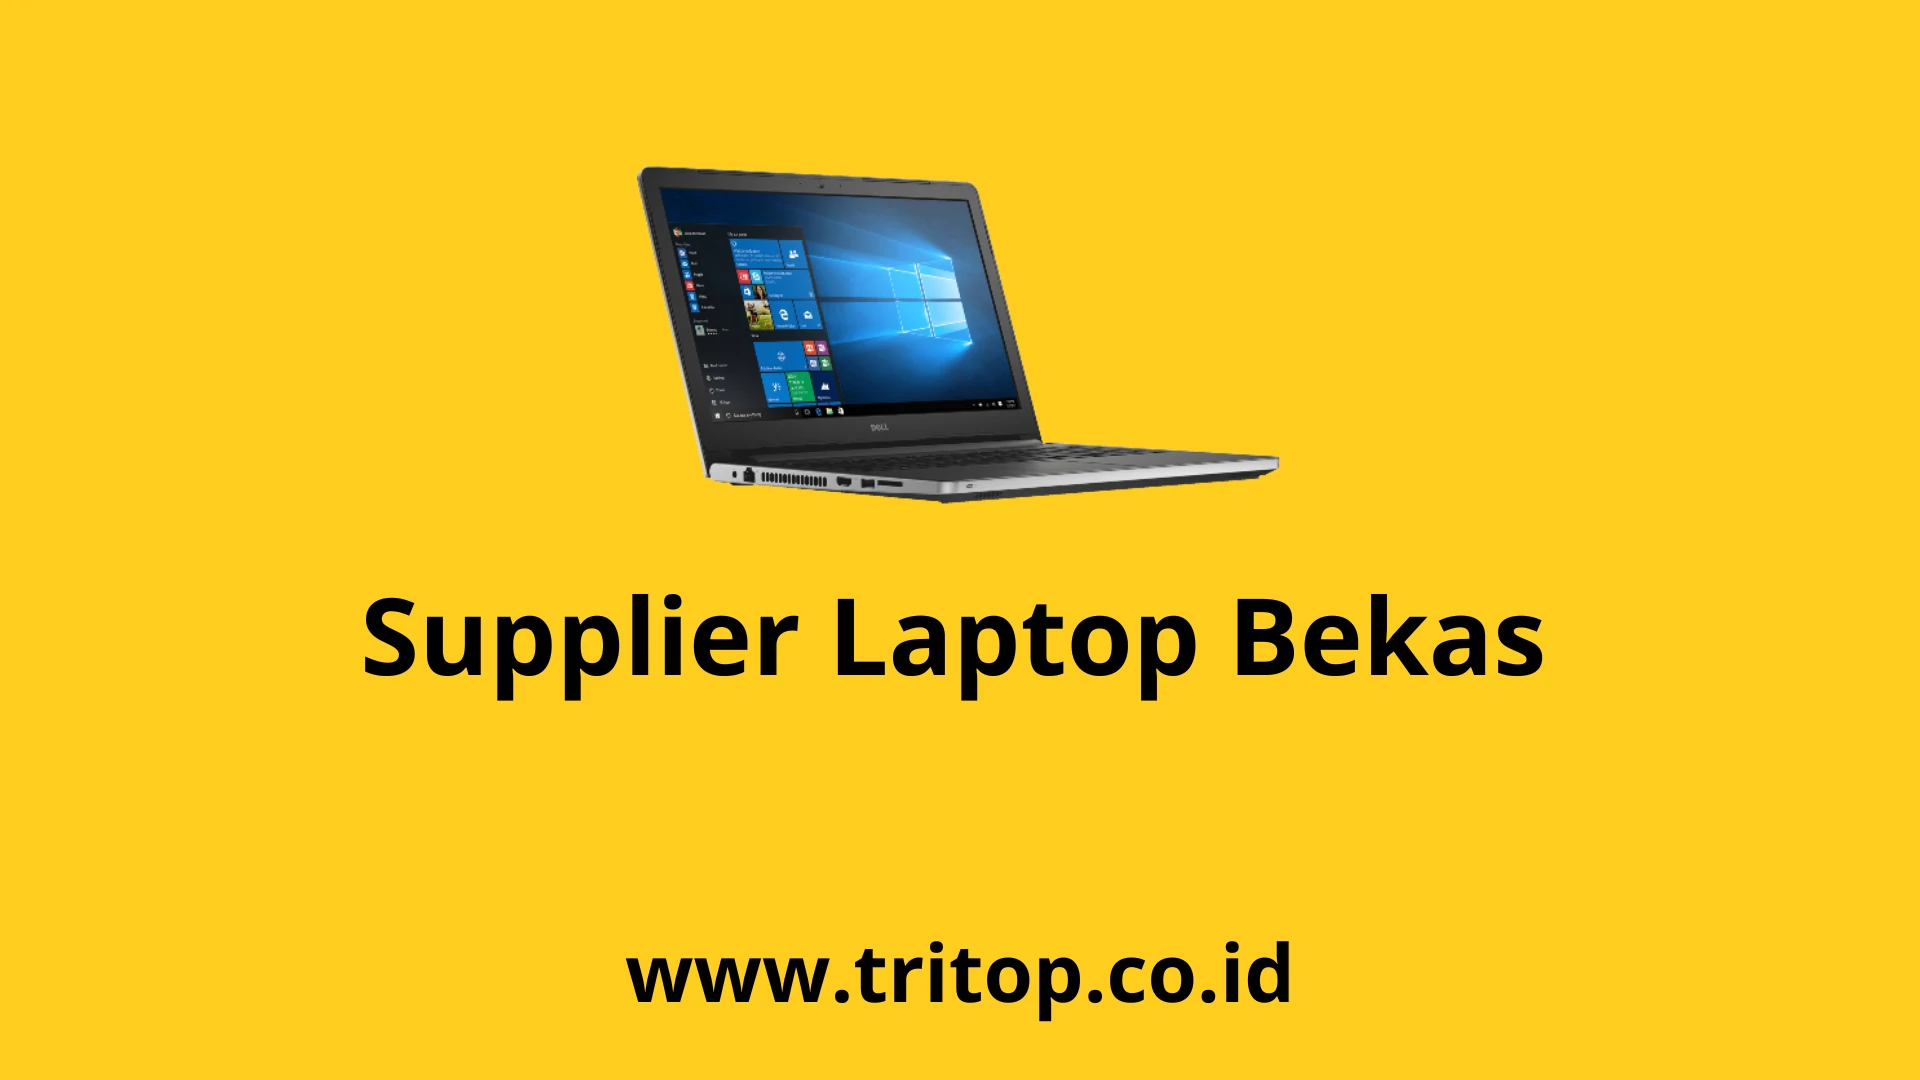 Supplier Laptop Bekas Tritop.co.id